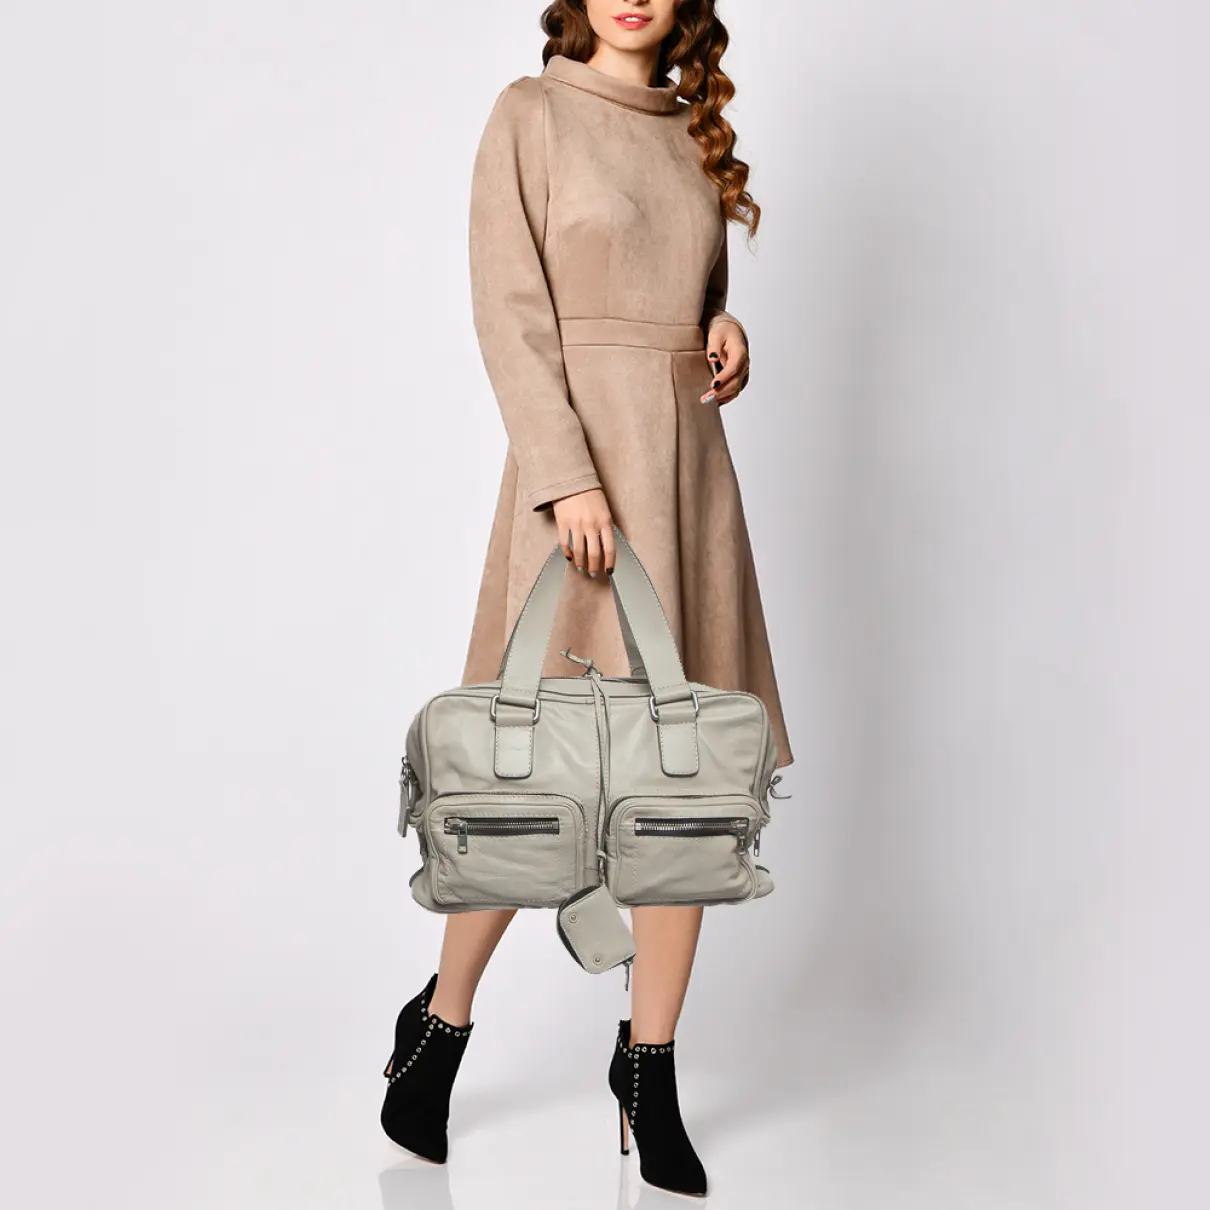 Buy Chloé Leather satchel online